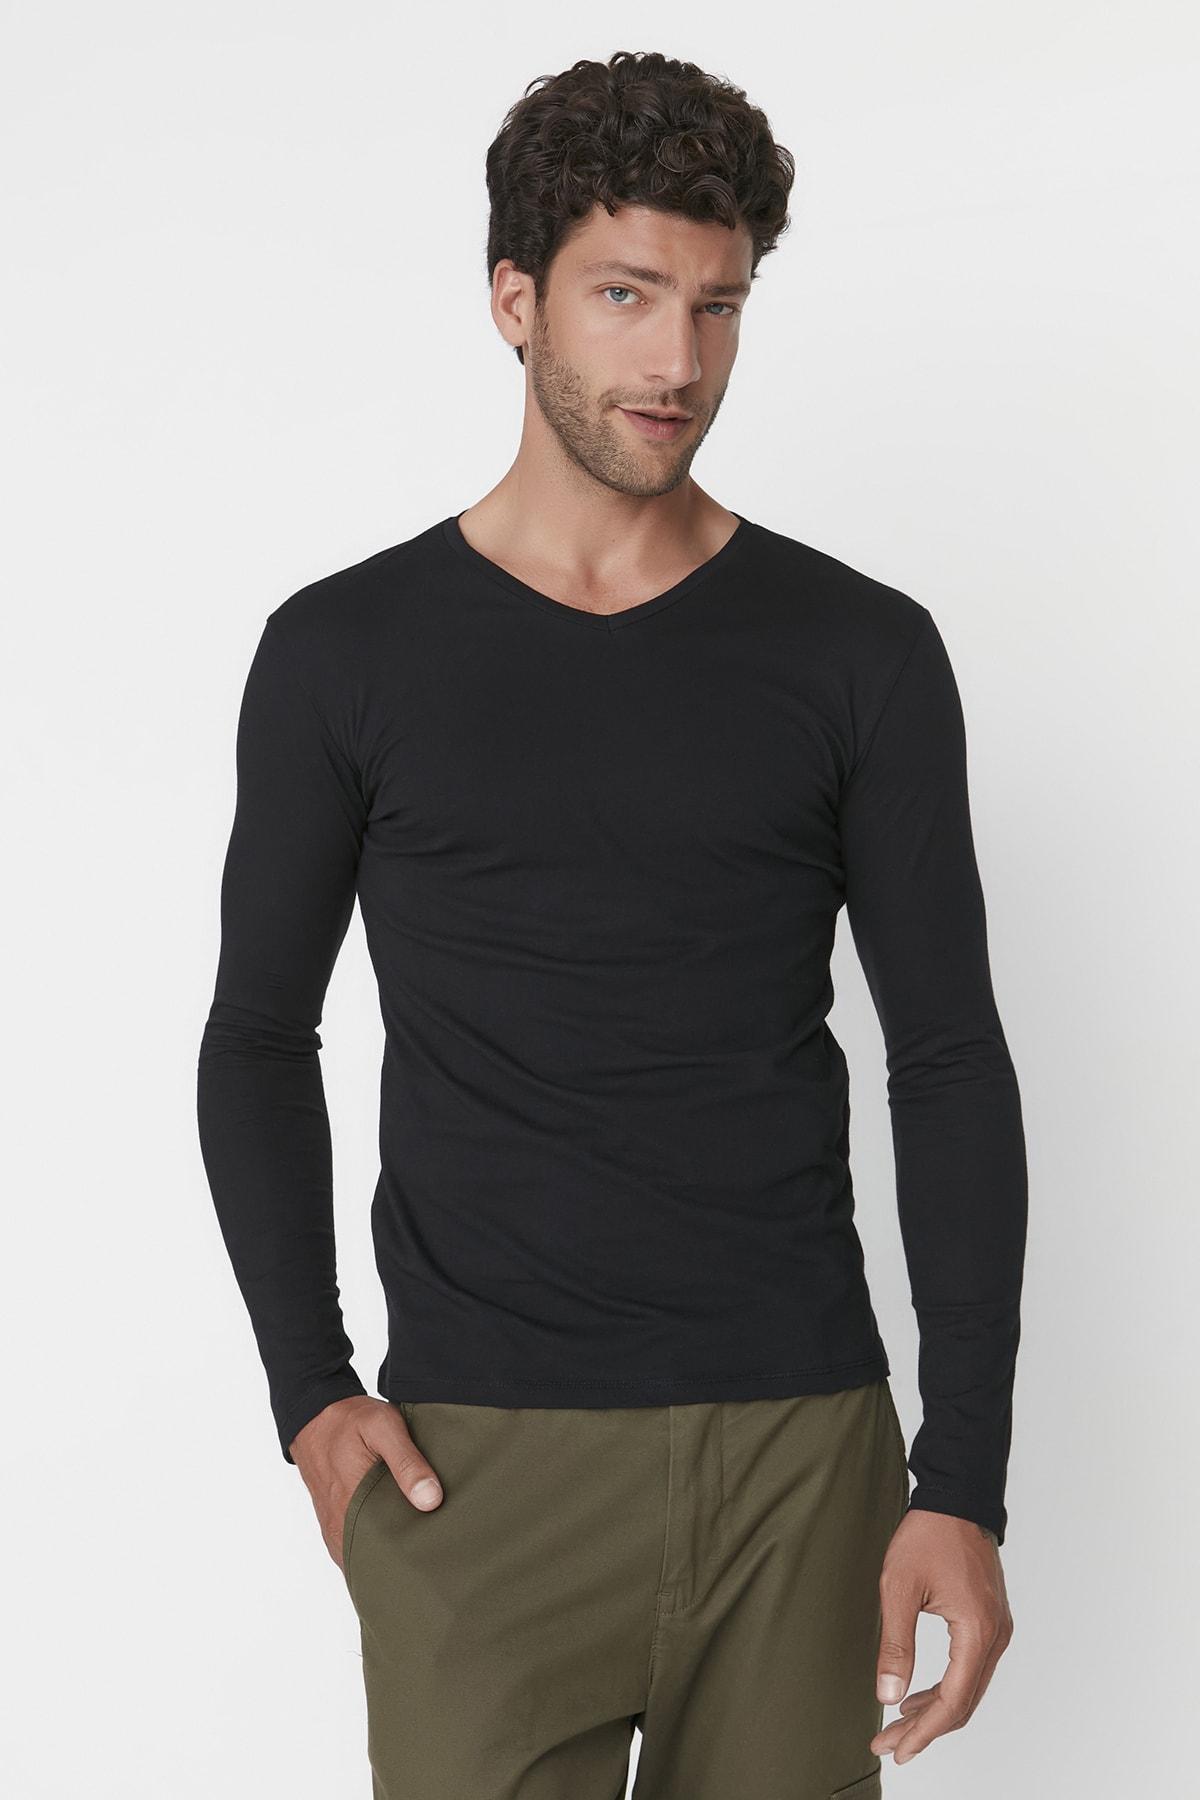 NEW WOMEN FASHION Men's Fashion New T-Shirt Black Regular Normal Cut V-Neck Long Sleeve Basic T-Shirt